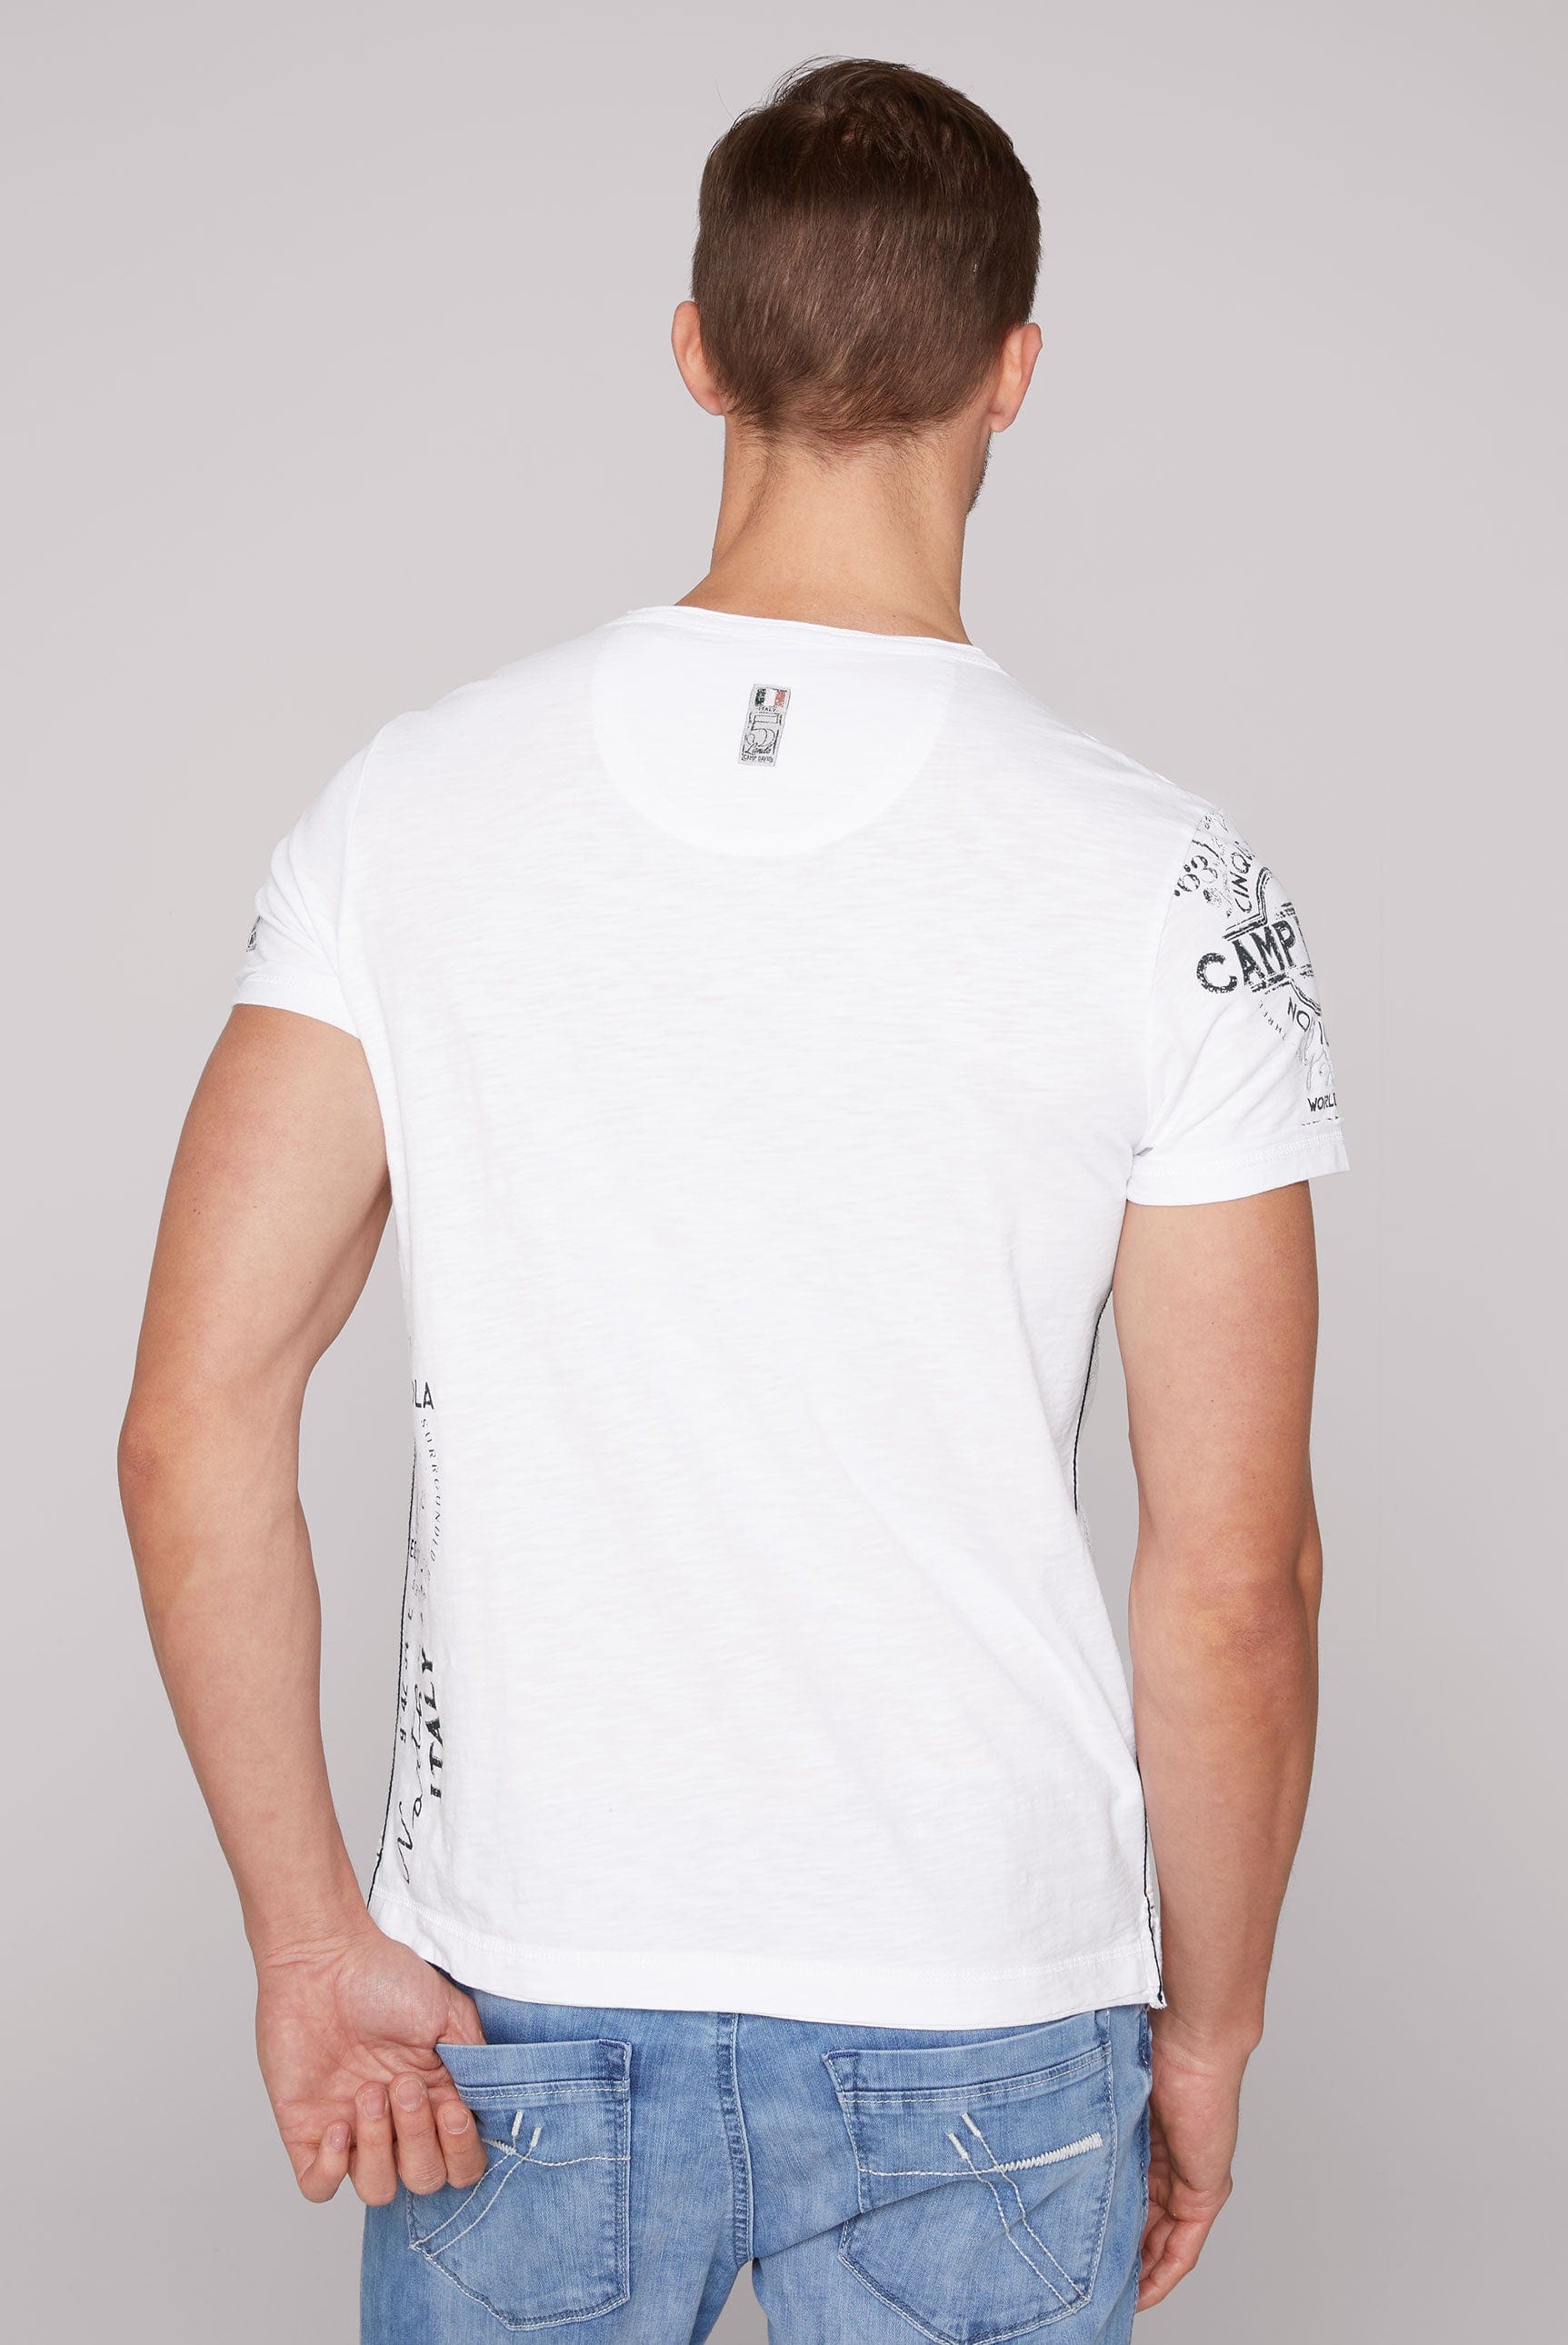 Camp David T-Shirt, button v-neck Terre, Chique - Stateshop Fashion optic white